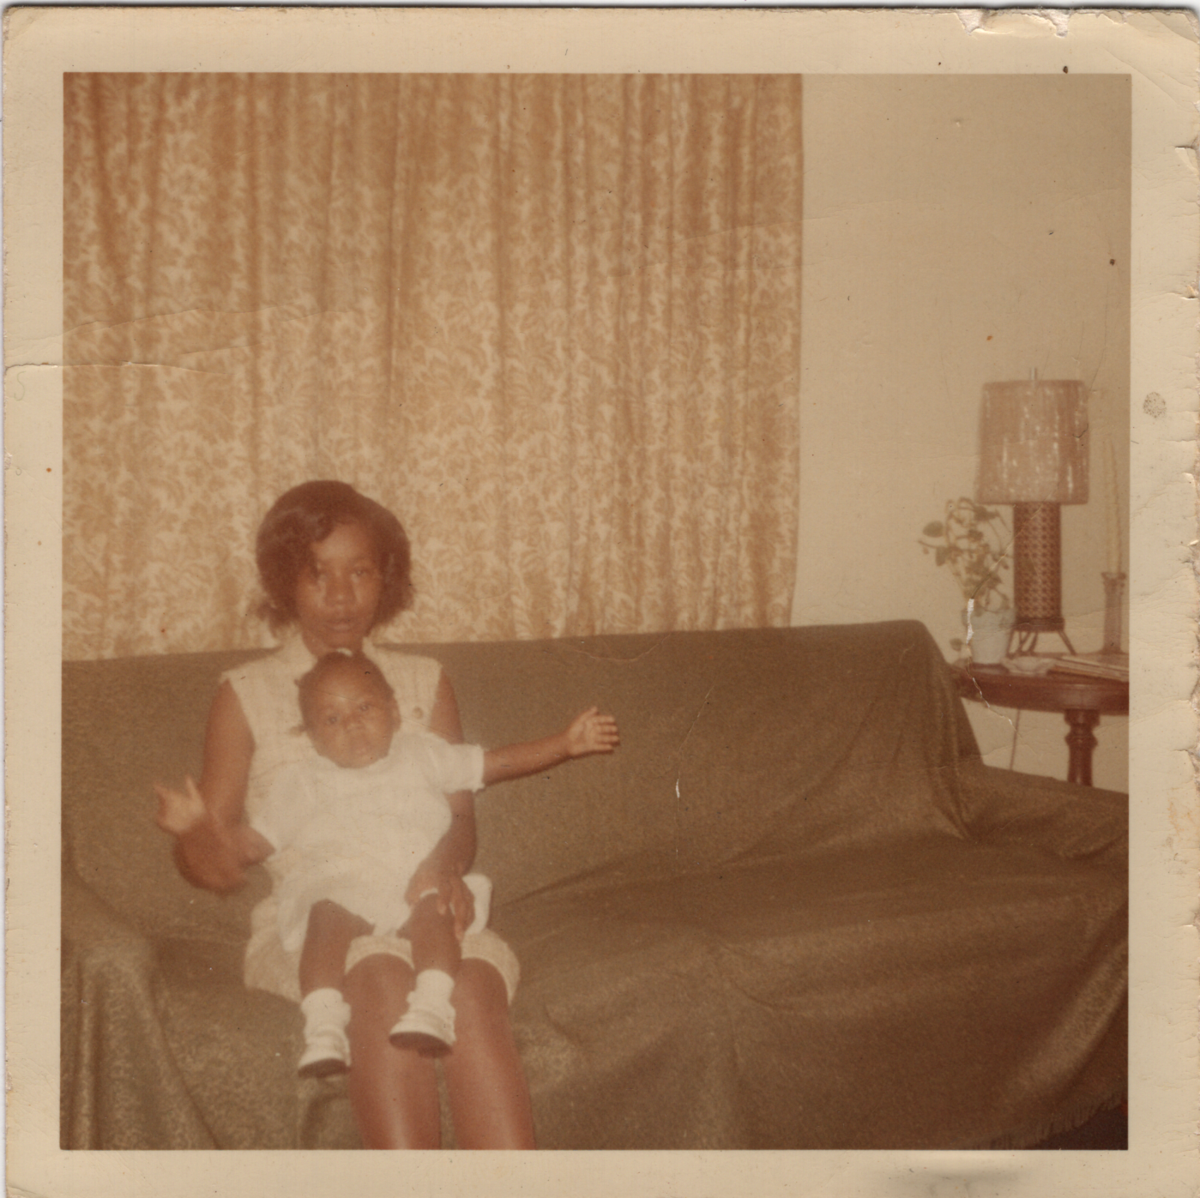 Sep 19 1968 - Osceola junior and senior on a couch. Likely from Osceola Jr's dedication.